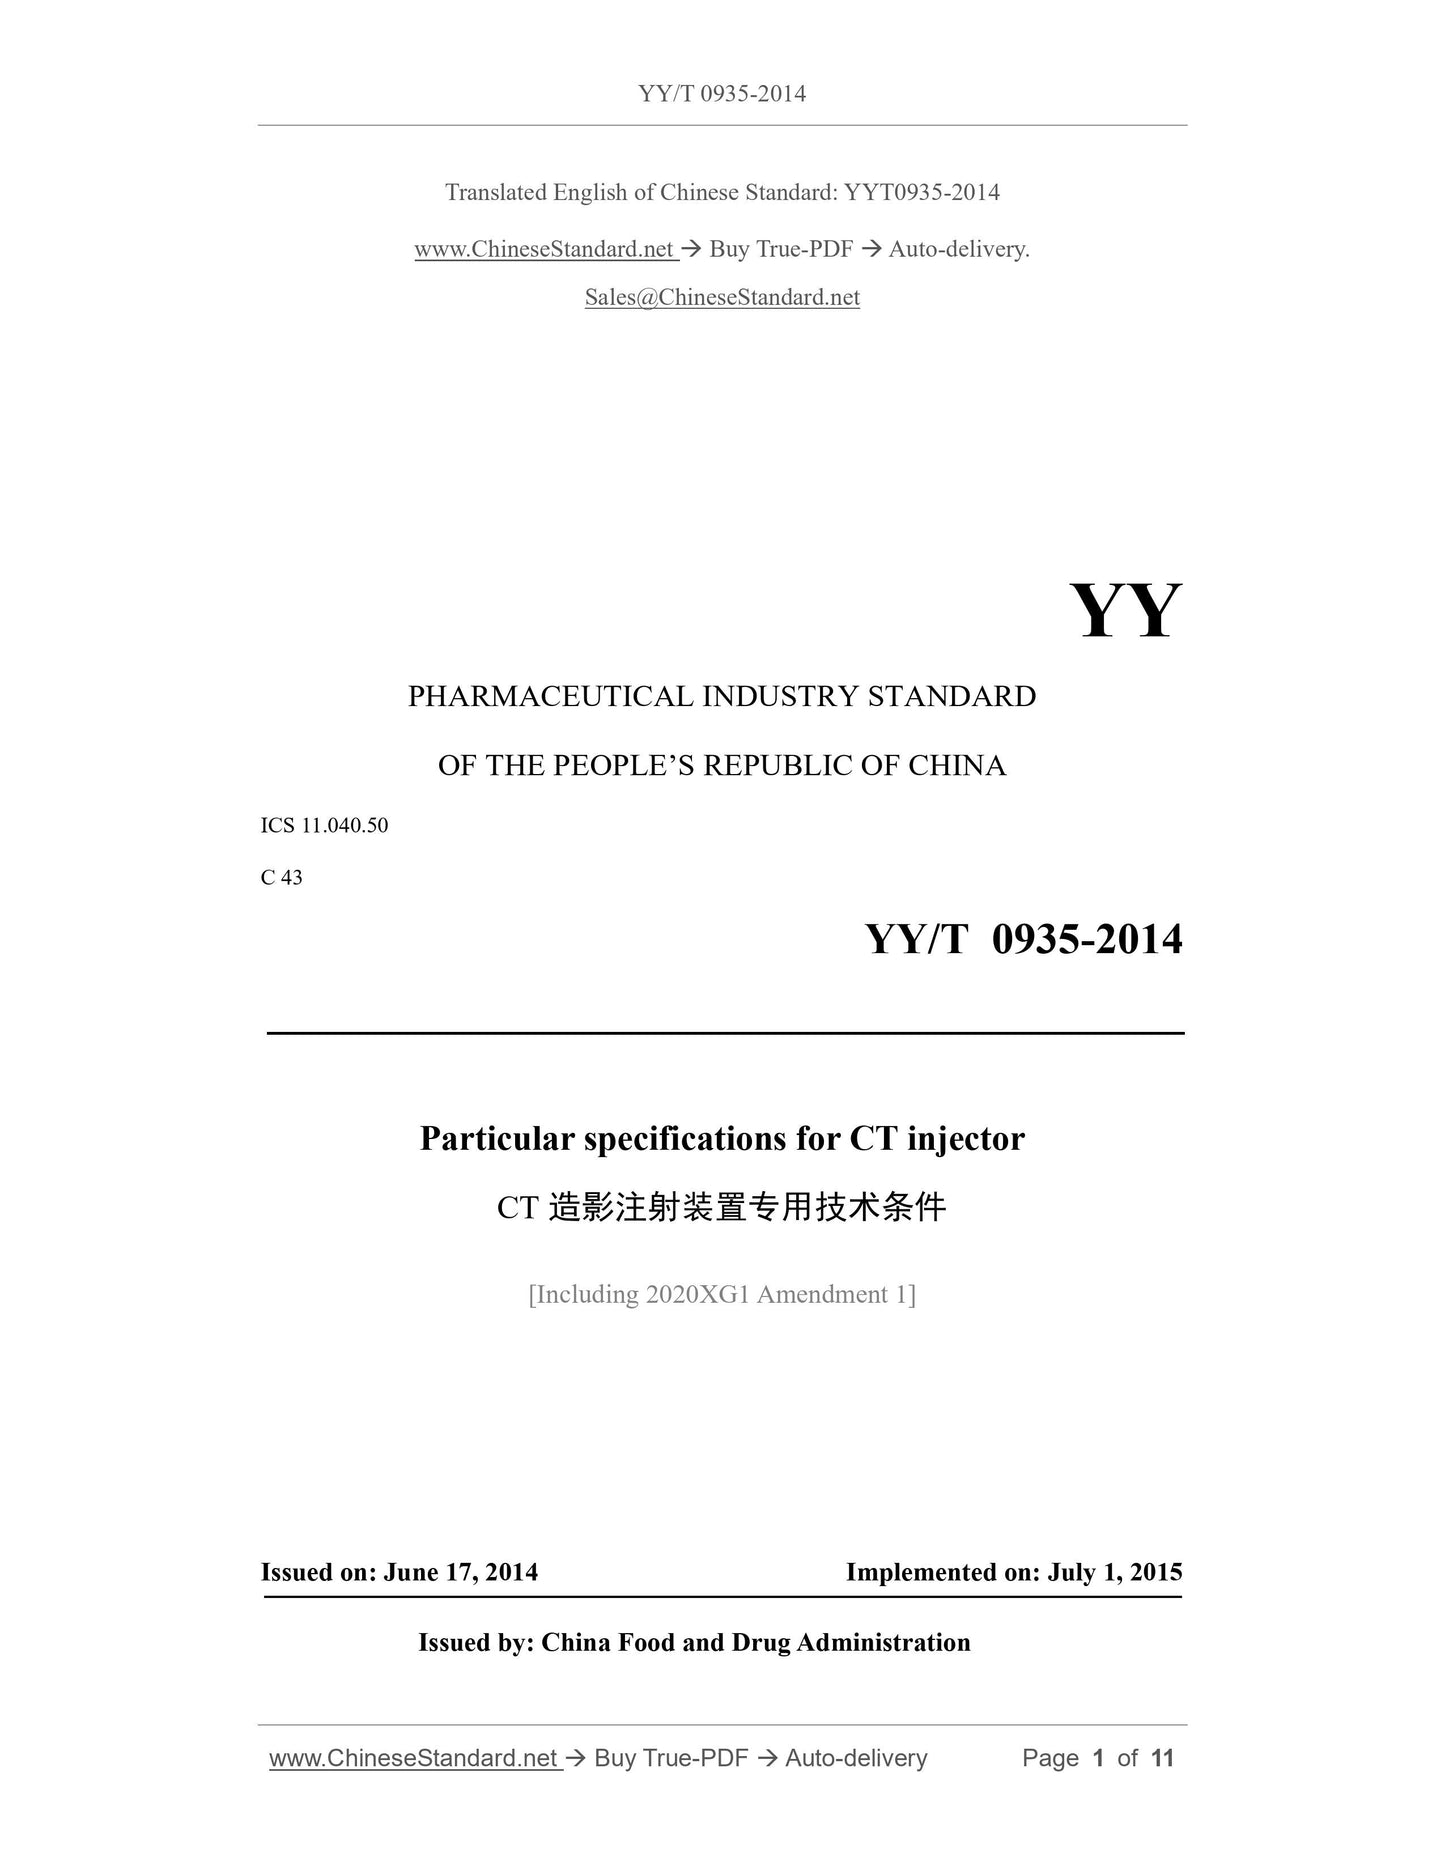 YY/T 0935-2014 Page 1